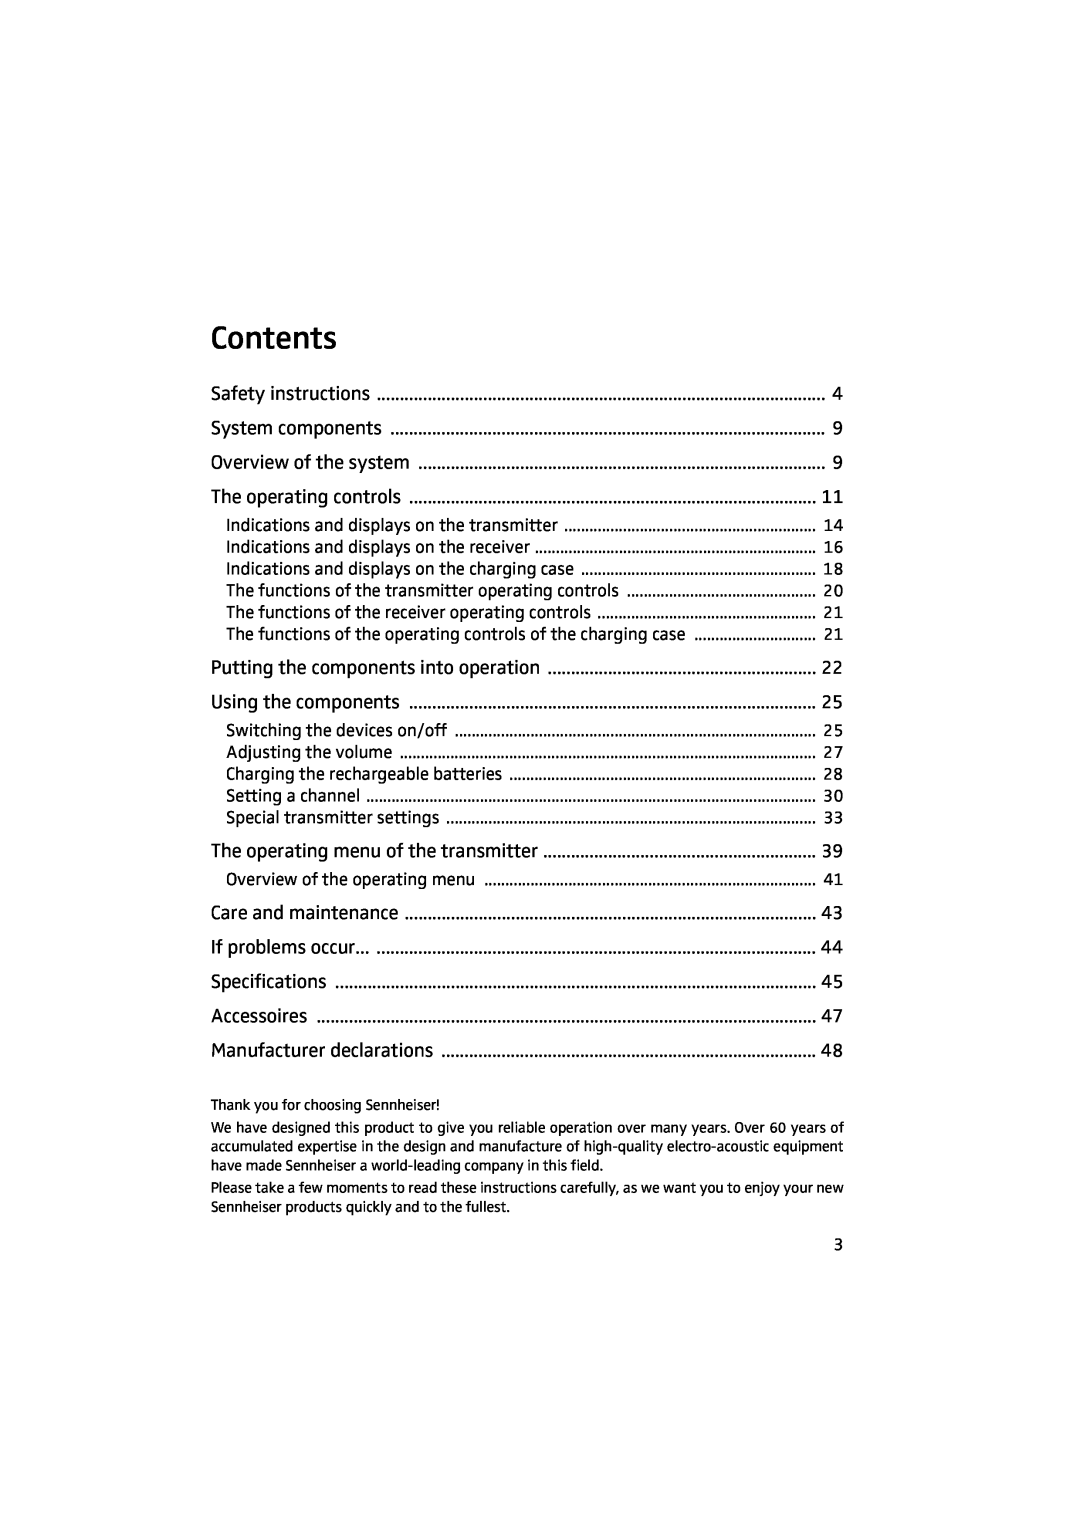 Sennheiser 2020 manual Contents 